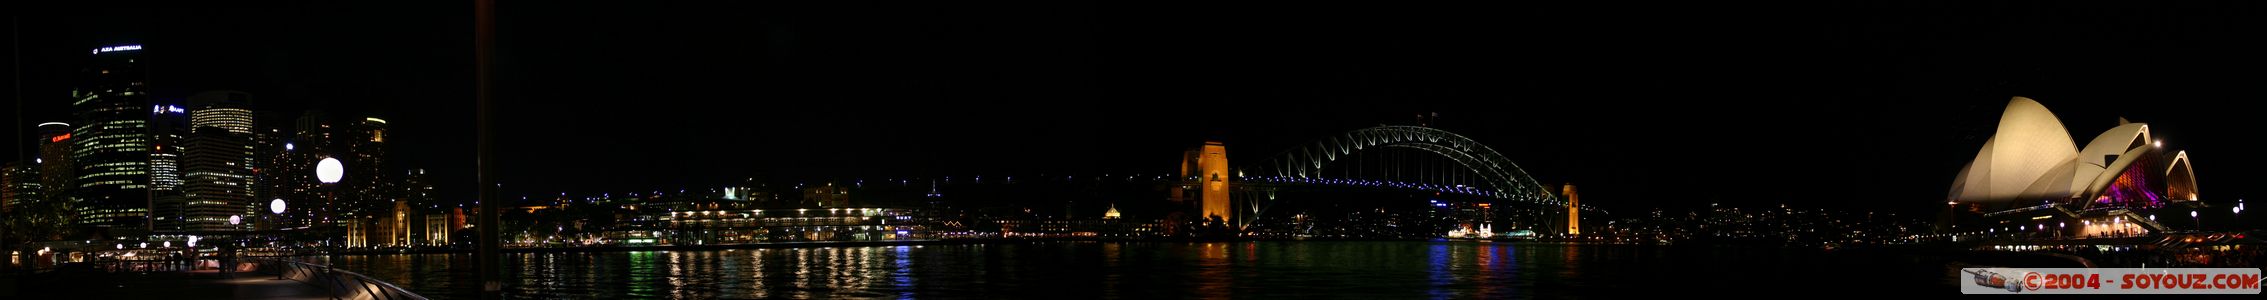 Sydney by Night - Circular Quay, Harbour Bridge and Opera House panorama
Mots-clés: Nuit patrimoine unesco Opera House panorama